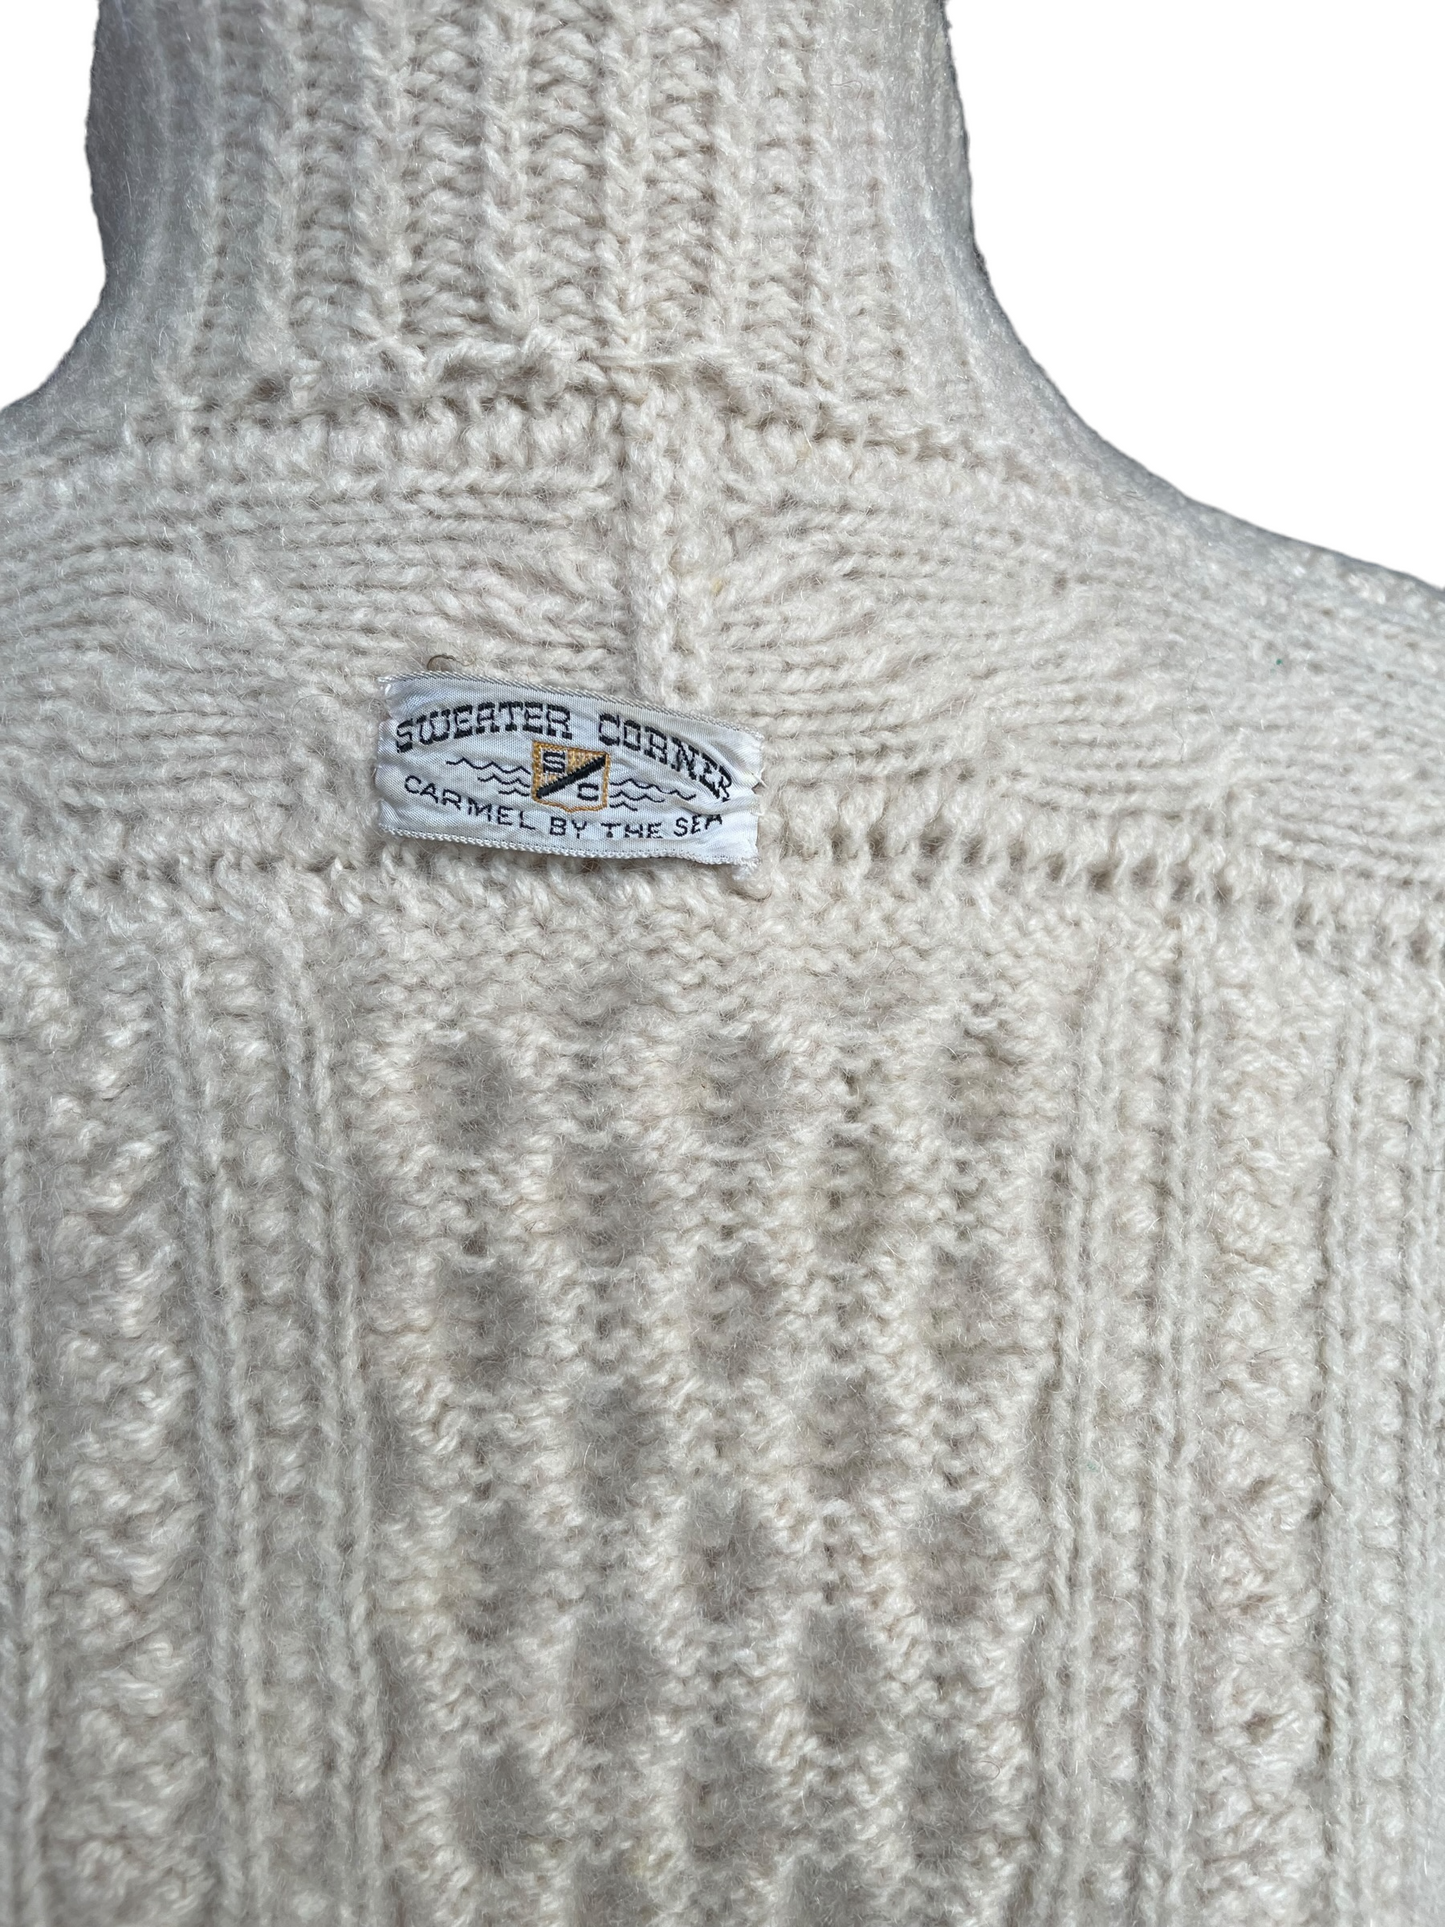 Inside close up of Sweater Corner label Vintage 1940's Wool Hand Knit Zip up Cardigan Sweater | Barn Owl Vintage | Seattle True Vintage